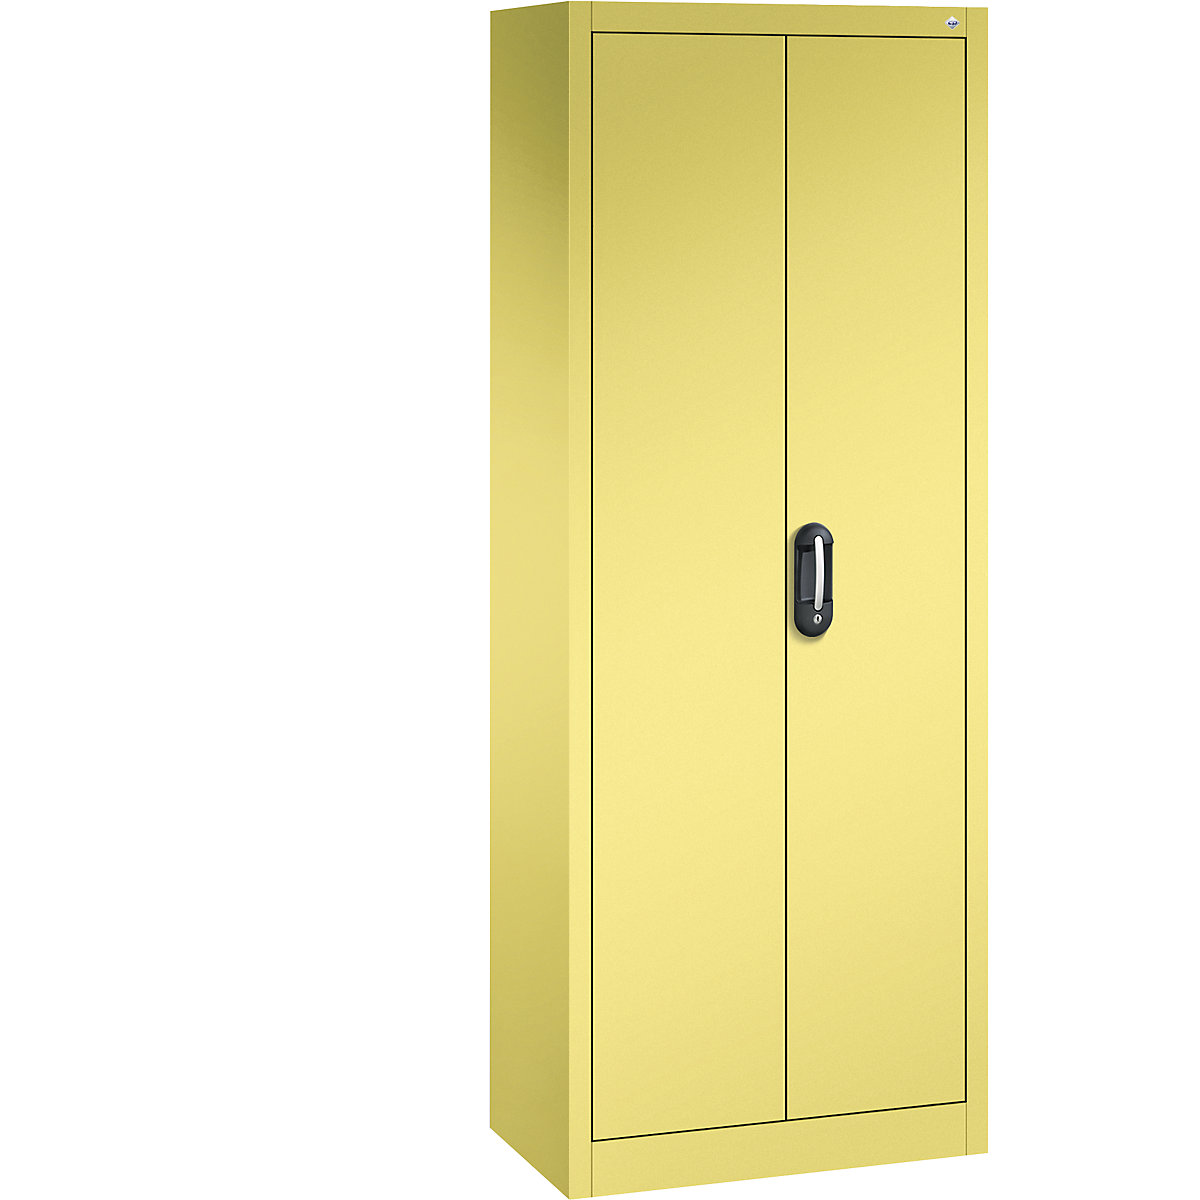 ACURADO universal cupboard – C+P, WxD 700 x 400 mm, sulphur yellow / sulphur yellow-21